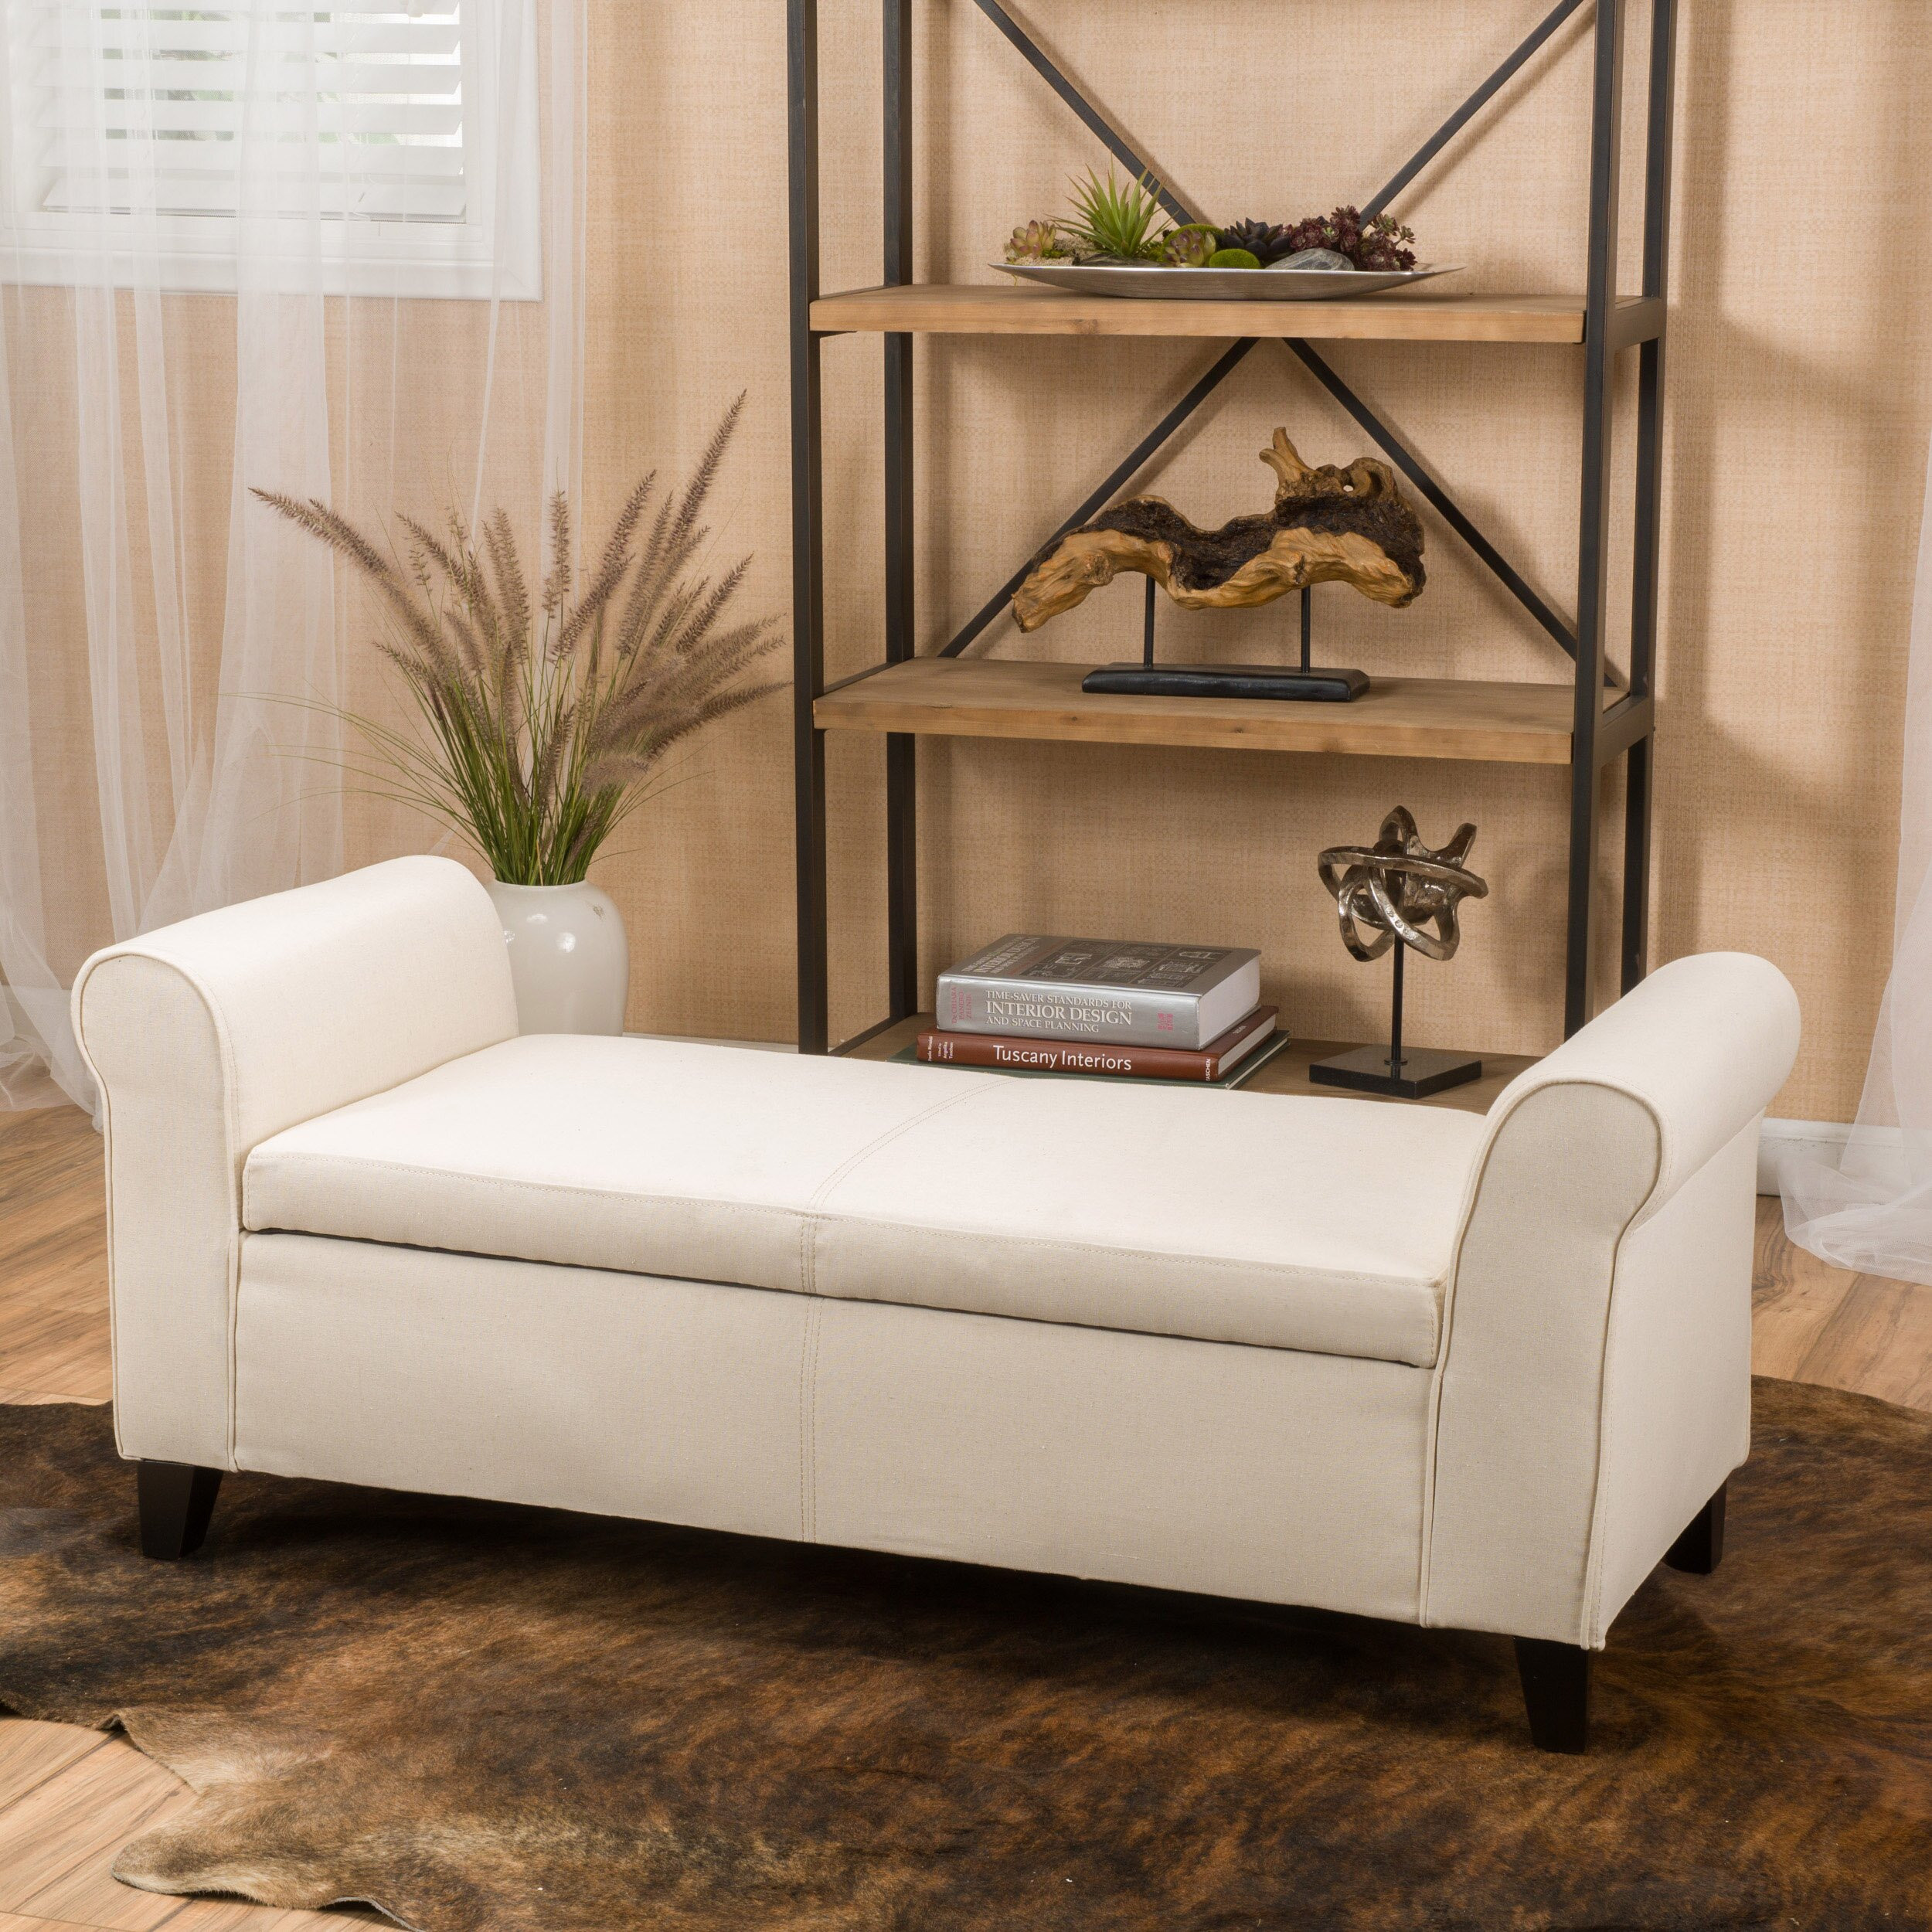 Bench For Bedroom With Storage
 Alcott Hill Varian Upholstered Storage Bedroom Bench